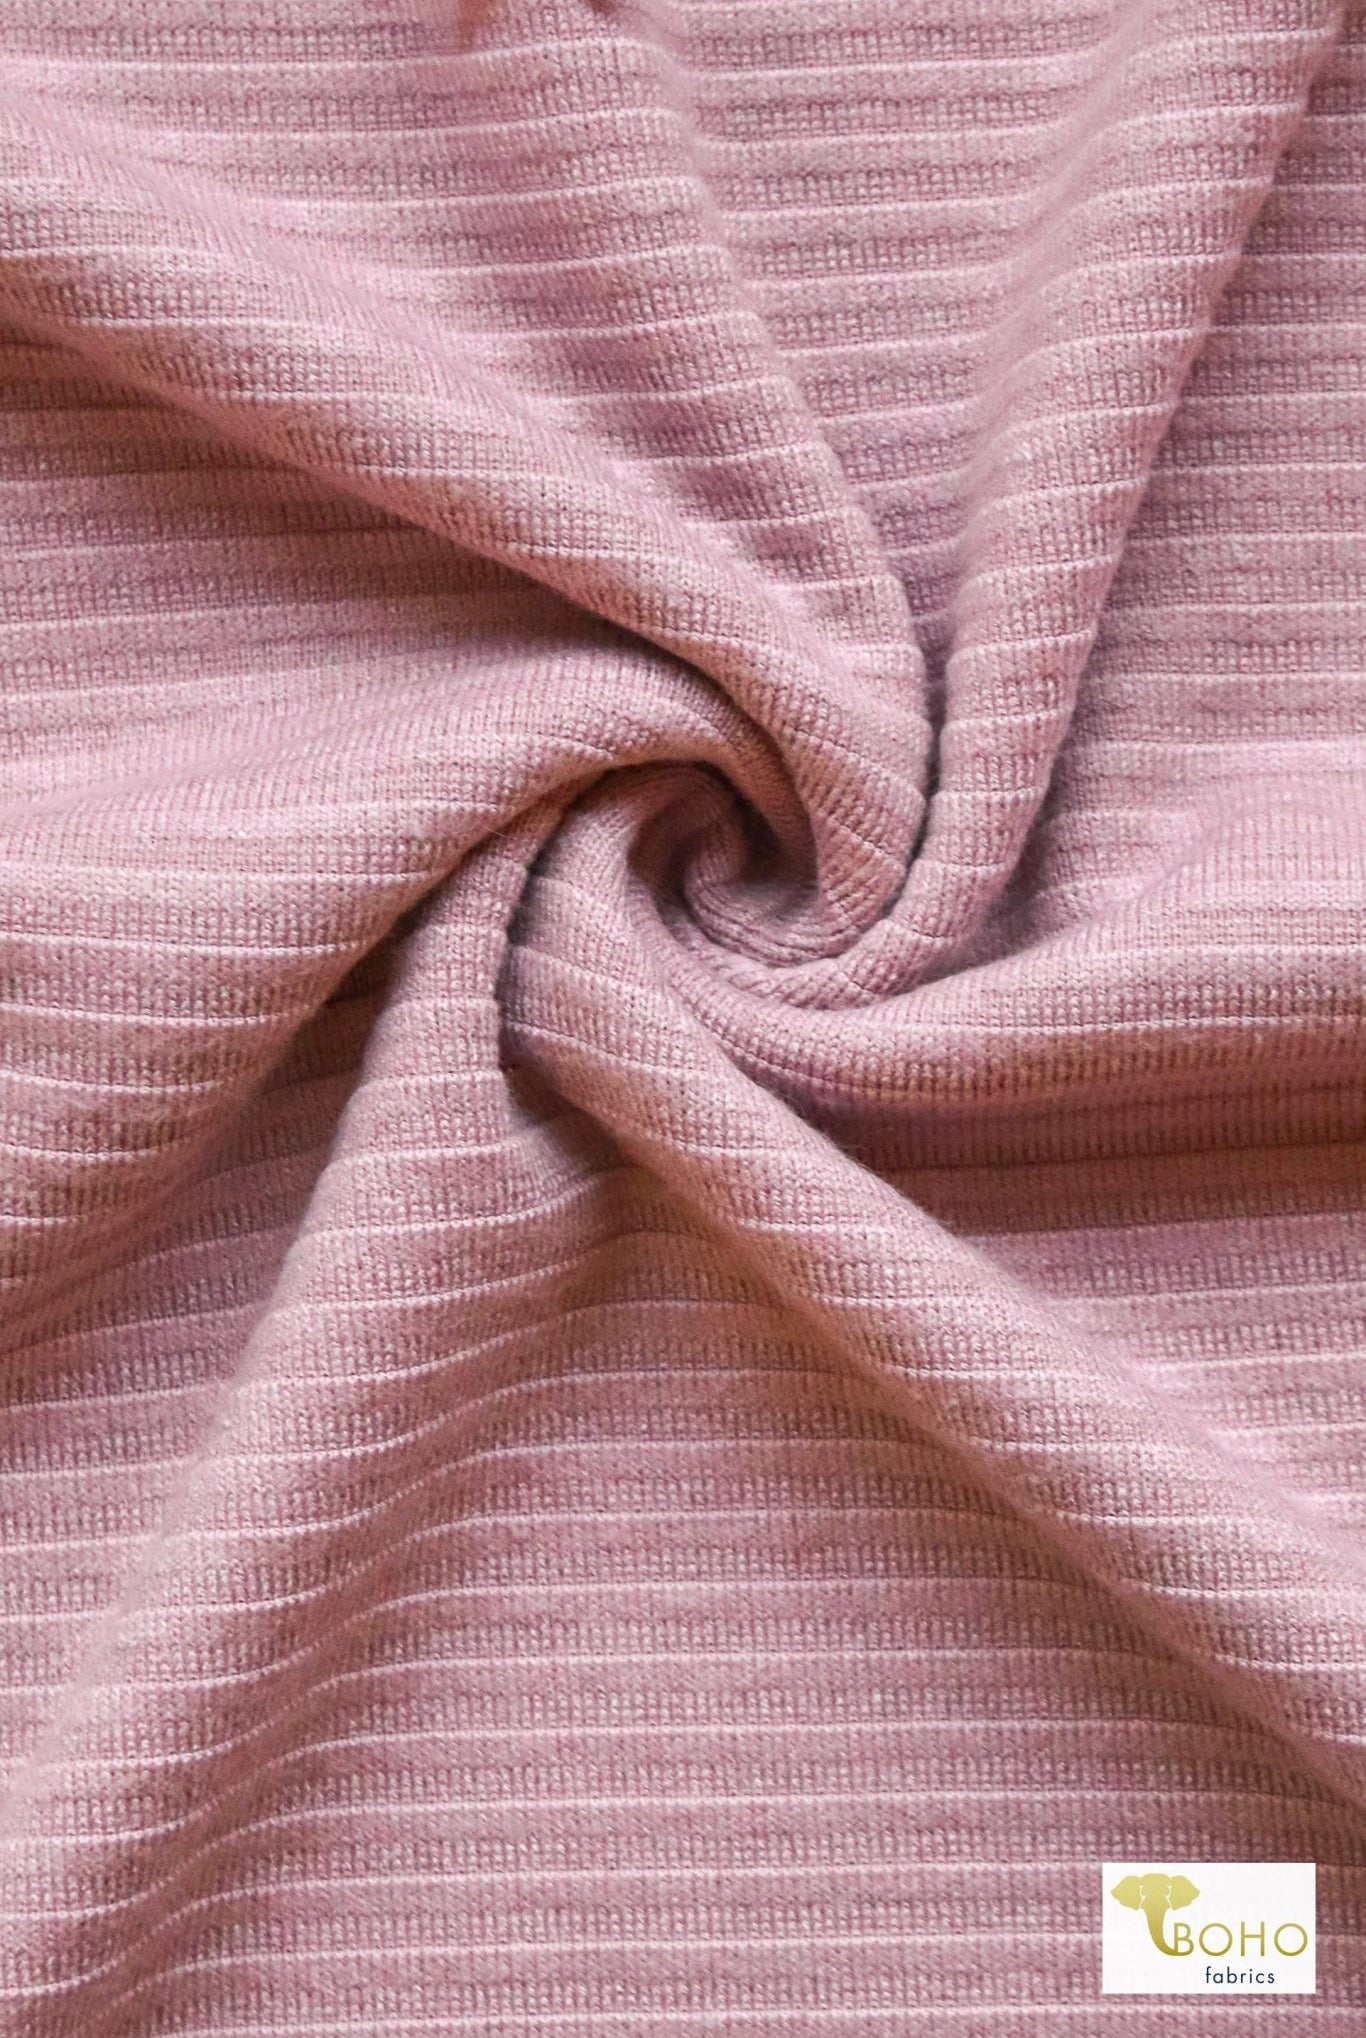 Heavy Rib: Mauve. Luxe Sweater Knit Fabric. 460 GSM - Boho Fabrics